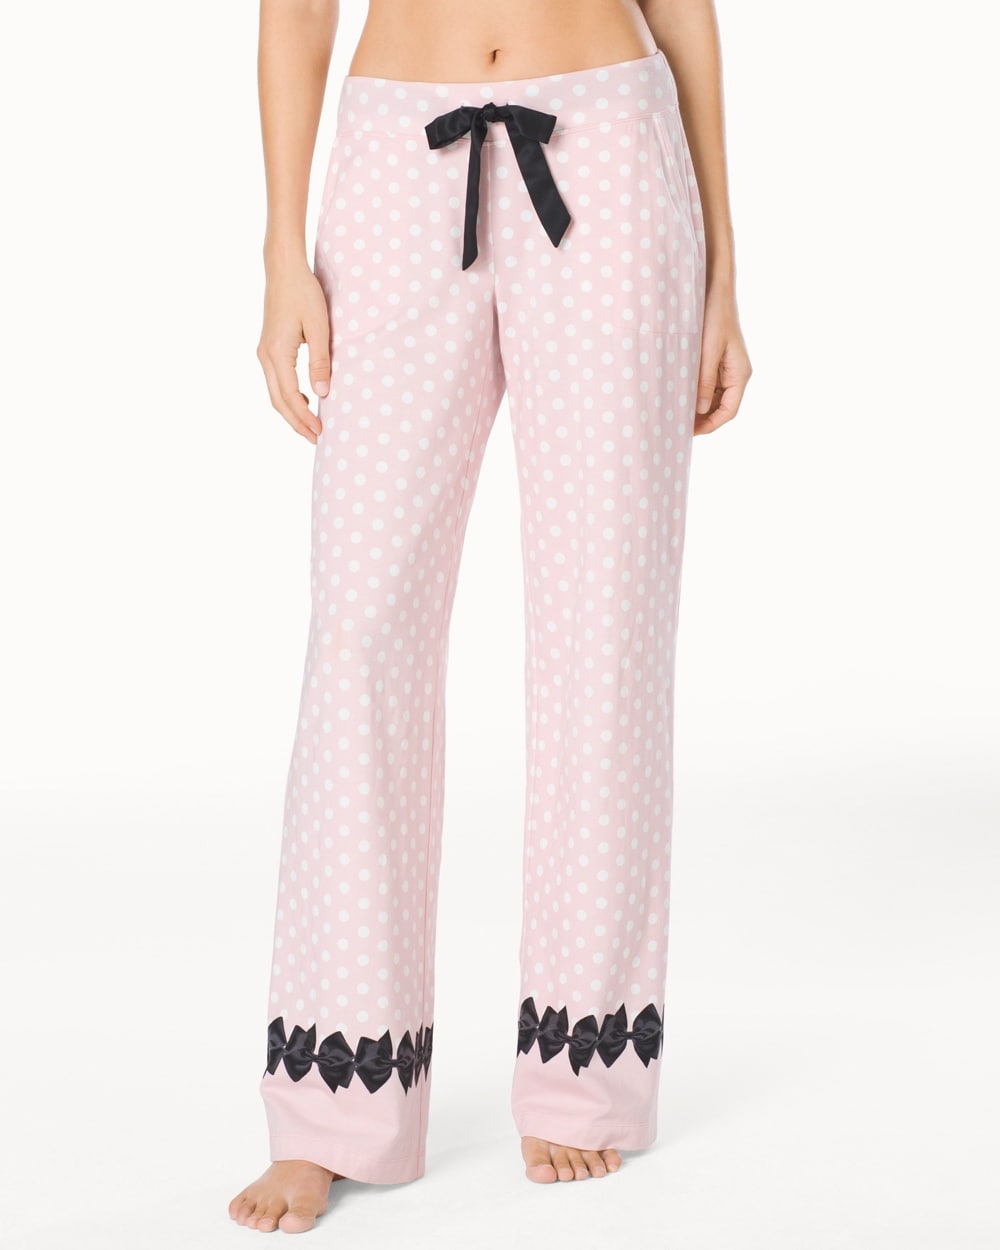 Embraceable Tall Inseam Pajama Pants Big Dot Pink Bows Border TL - Soma